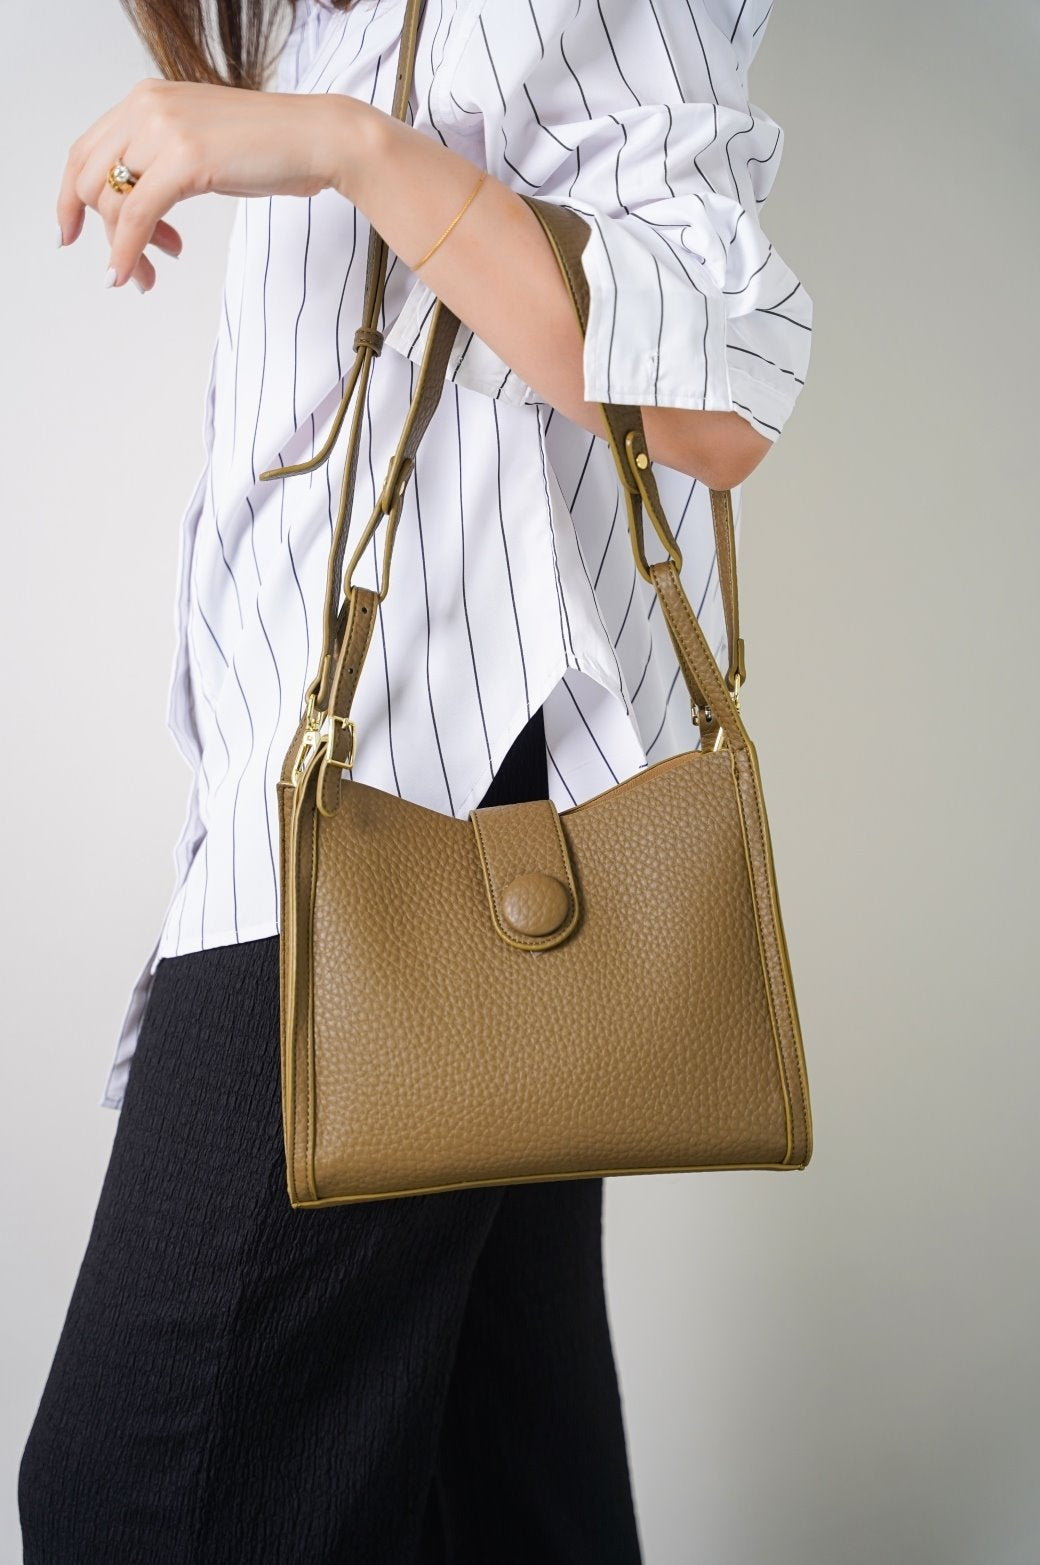 Buy LAVIE Women's Fuji Small Satchel Bag | Ladies Purse Handbag at Amazon.in